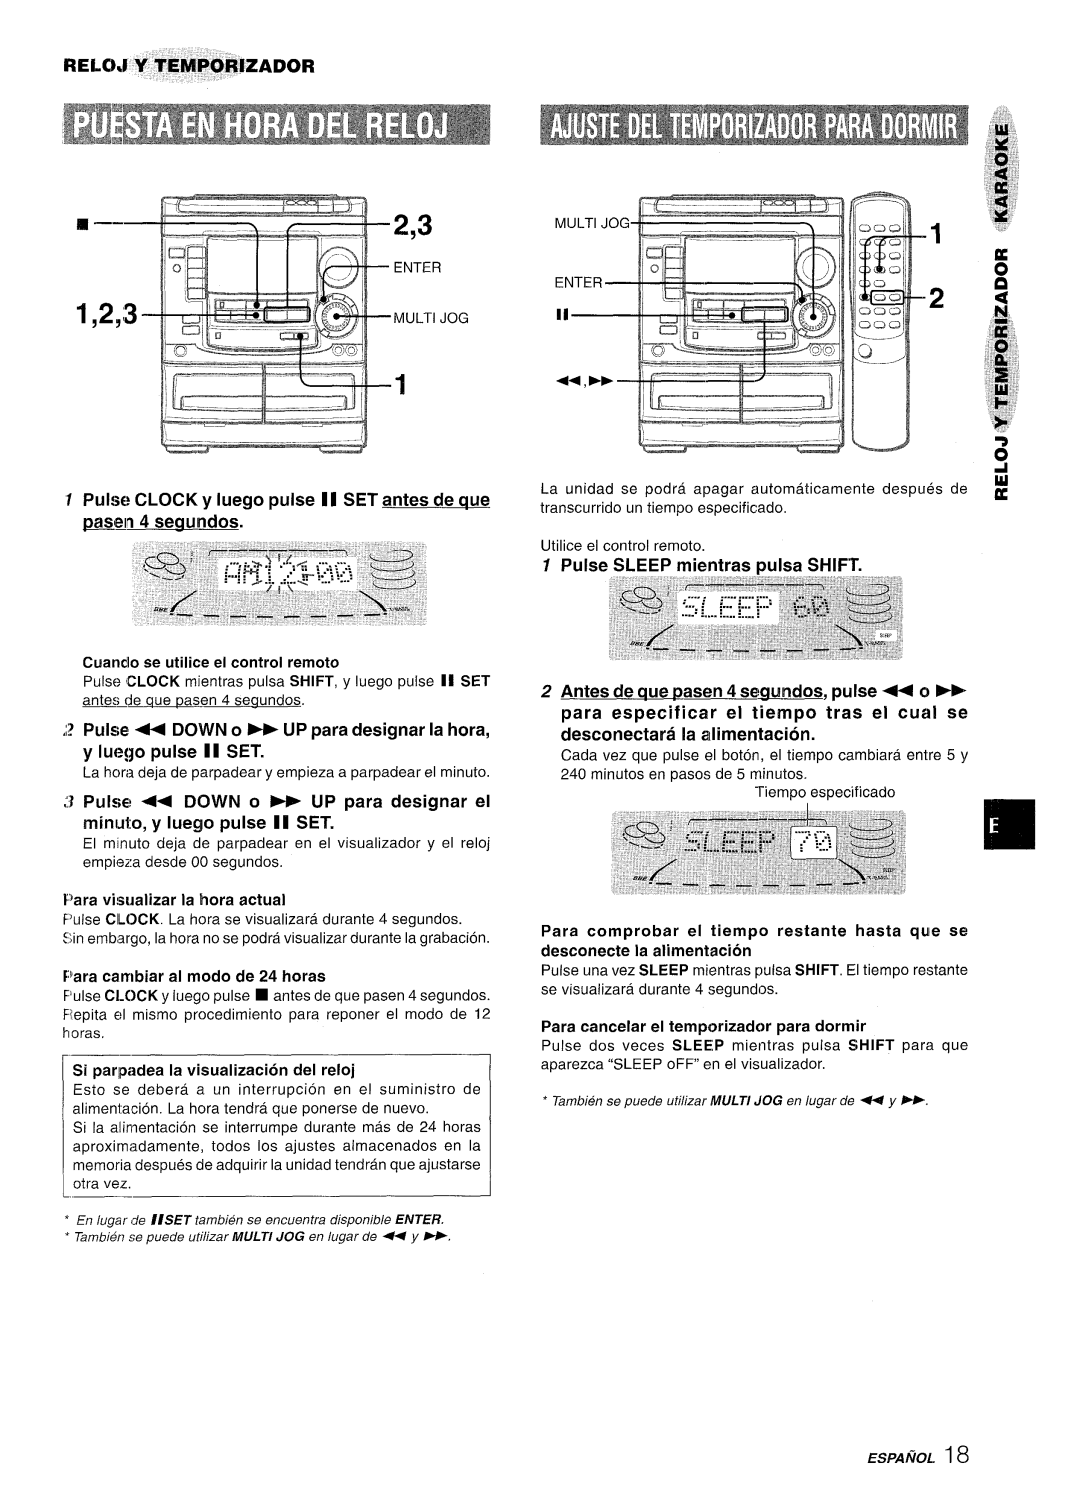 Aiwa NSX-A508 manual “1 Pulse CLOCK y Iuego pulse 11 SET antes de aue ~~n 4 segundos, ~, ... J U 